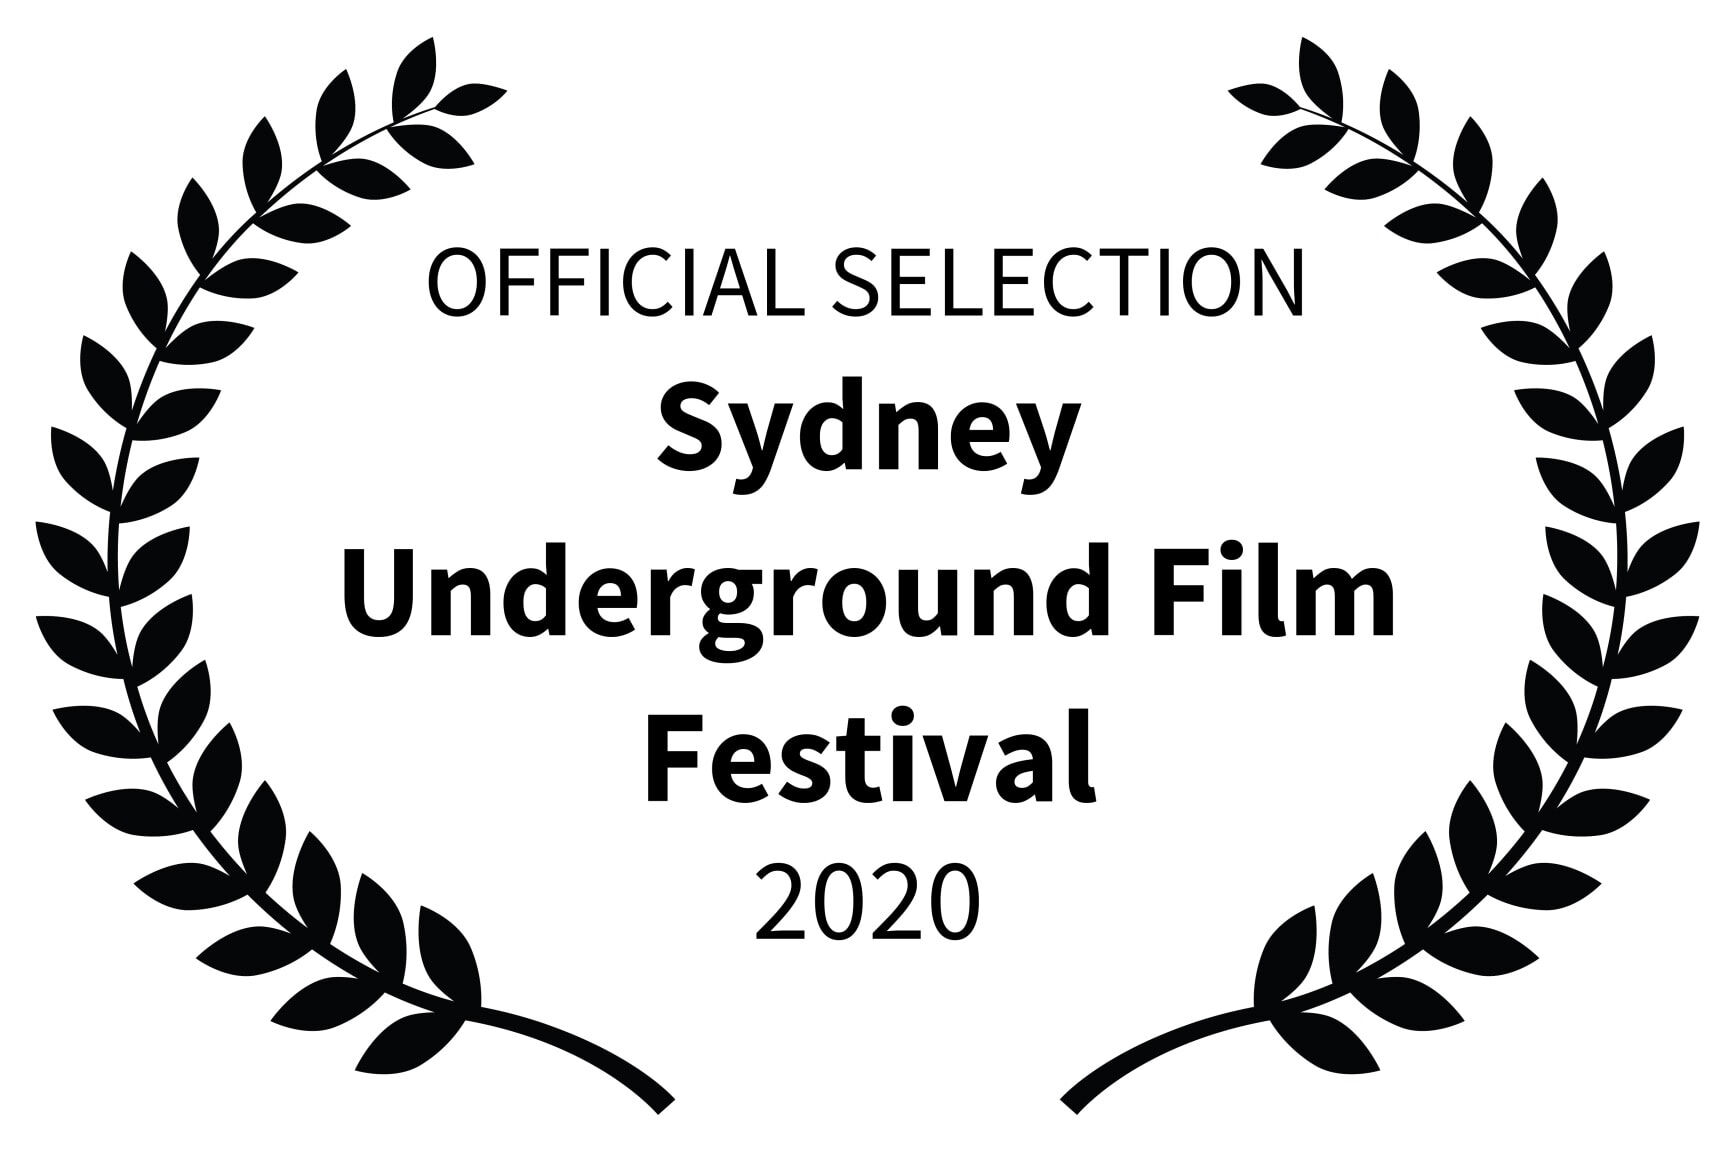 OFFICIAL SELECTION - Sydney Underground Film Festival - 2020